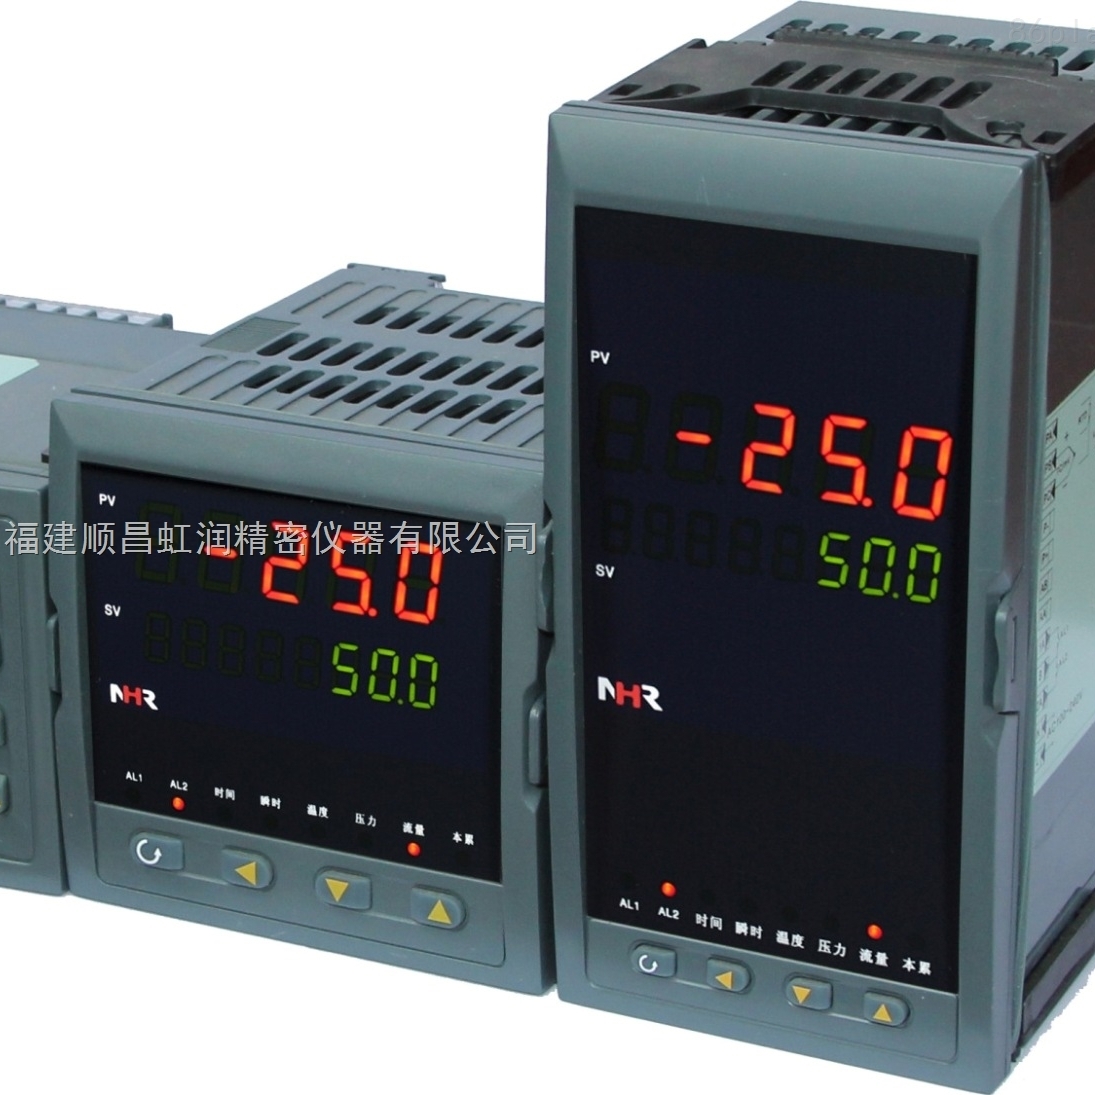 NHR-5610系列熱量積算控制儀